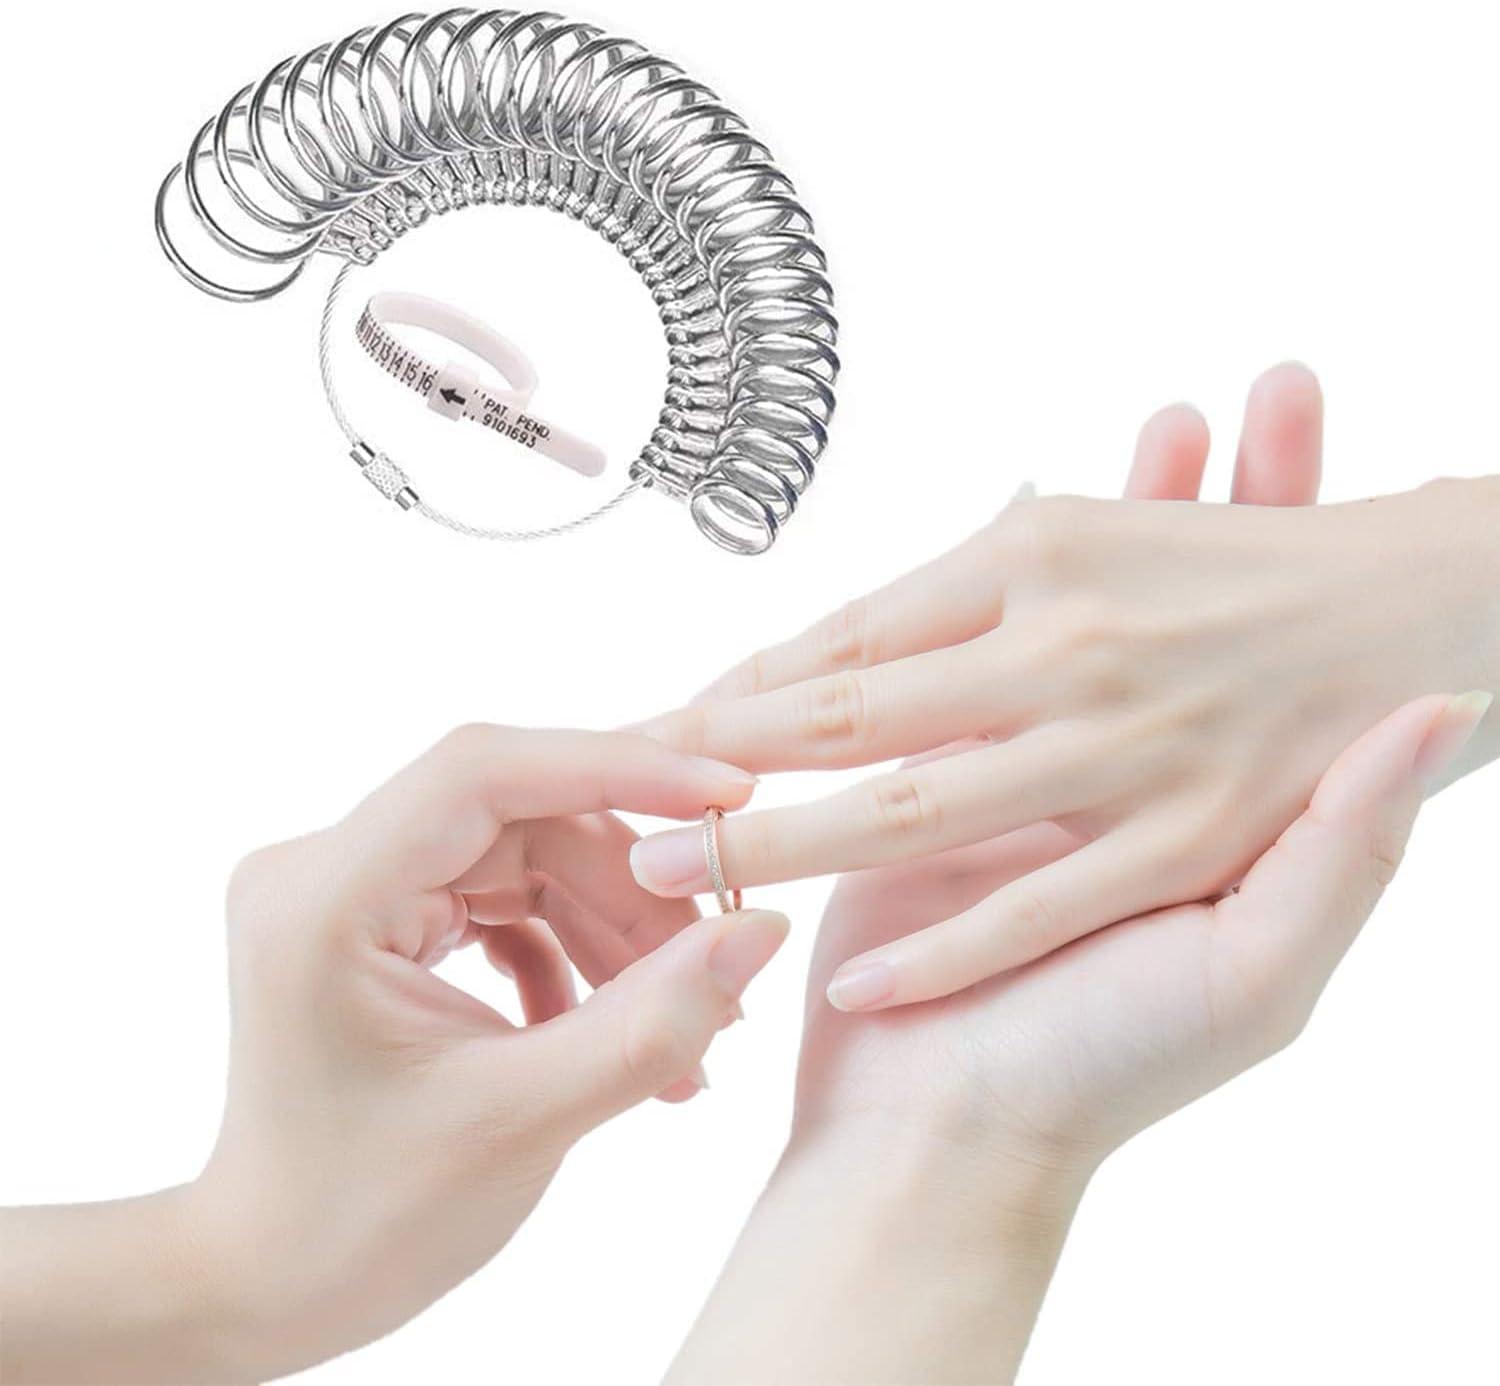 Black Plastic Ring Sizer Measure Sizes 1-17 Finger Gauge Genuine